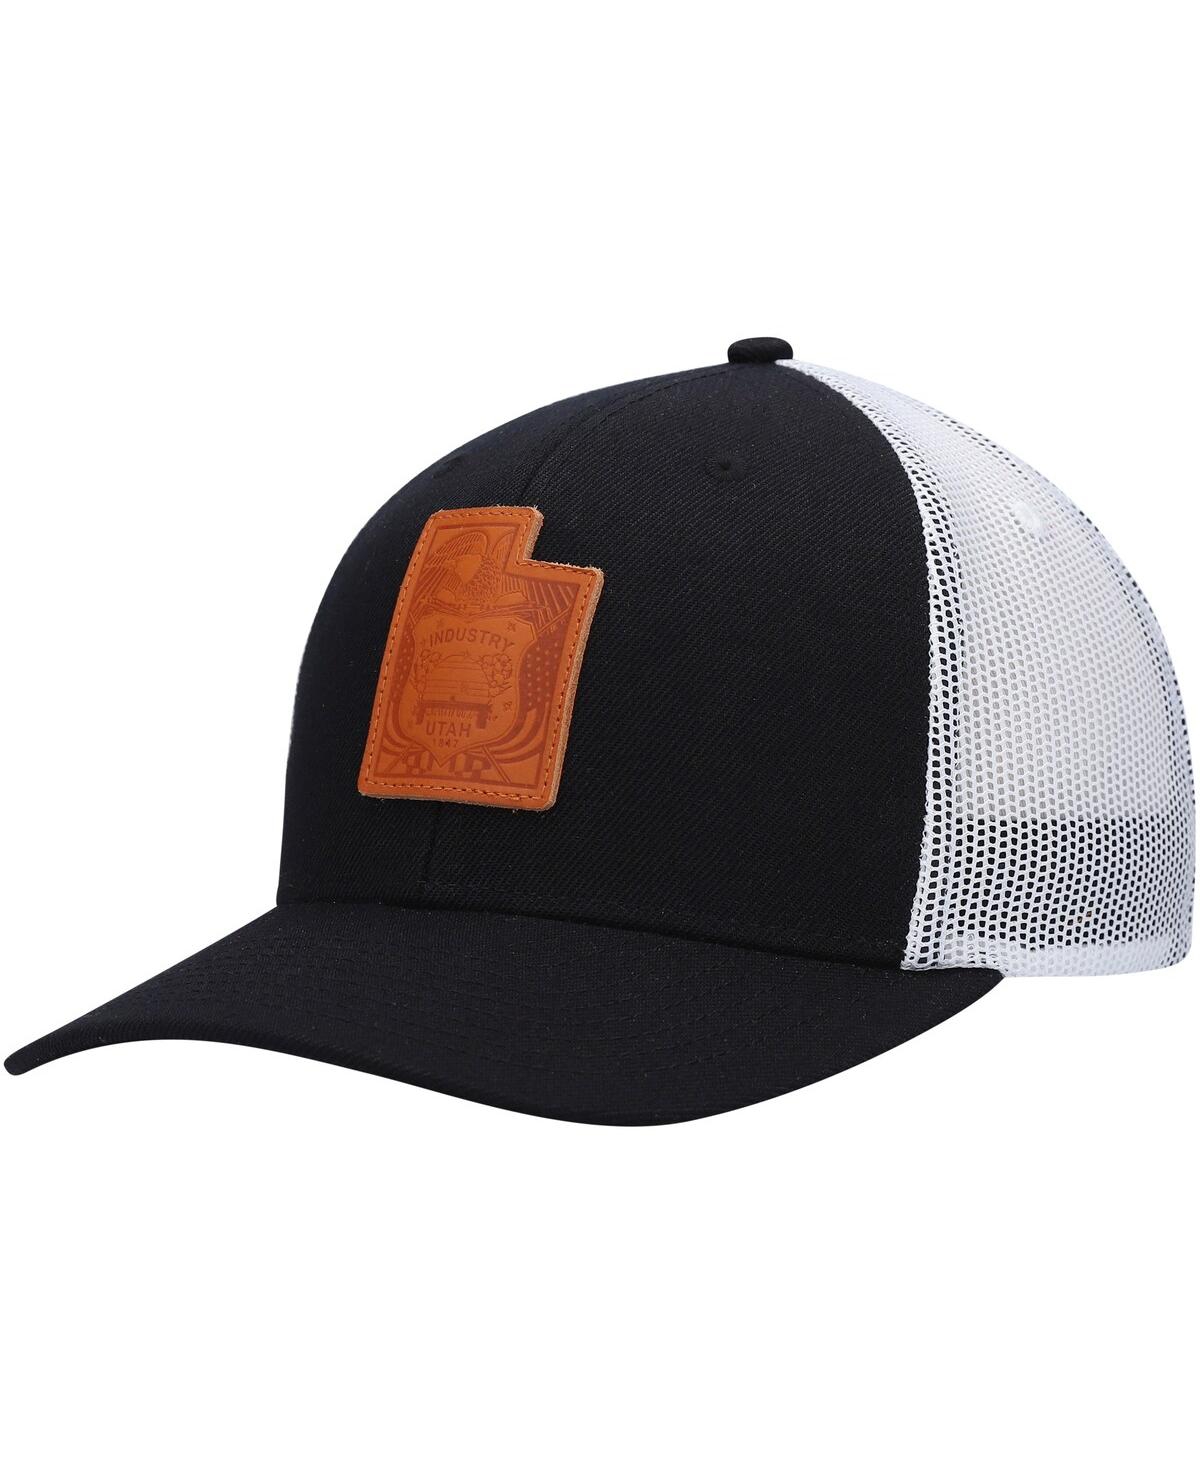 Local Crowns Men's  Black Utah Leather State Applique Trucker Snapback Hat